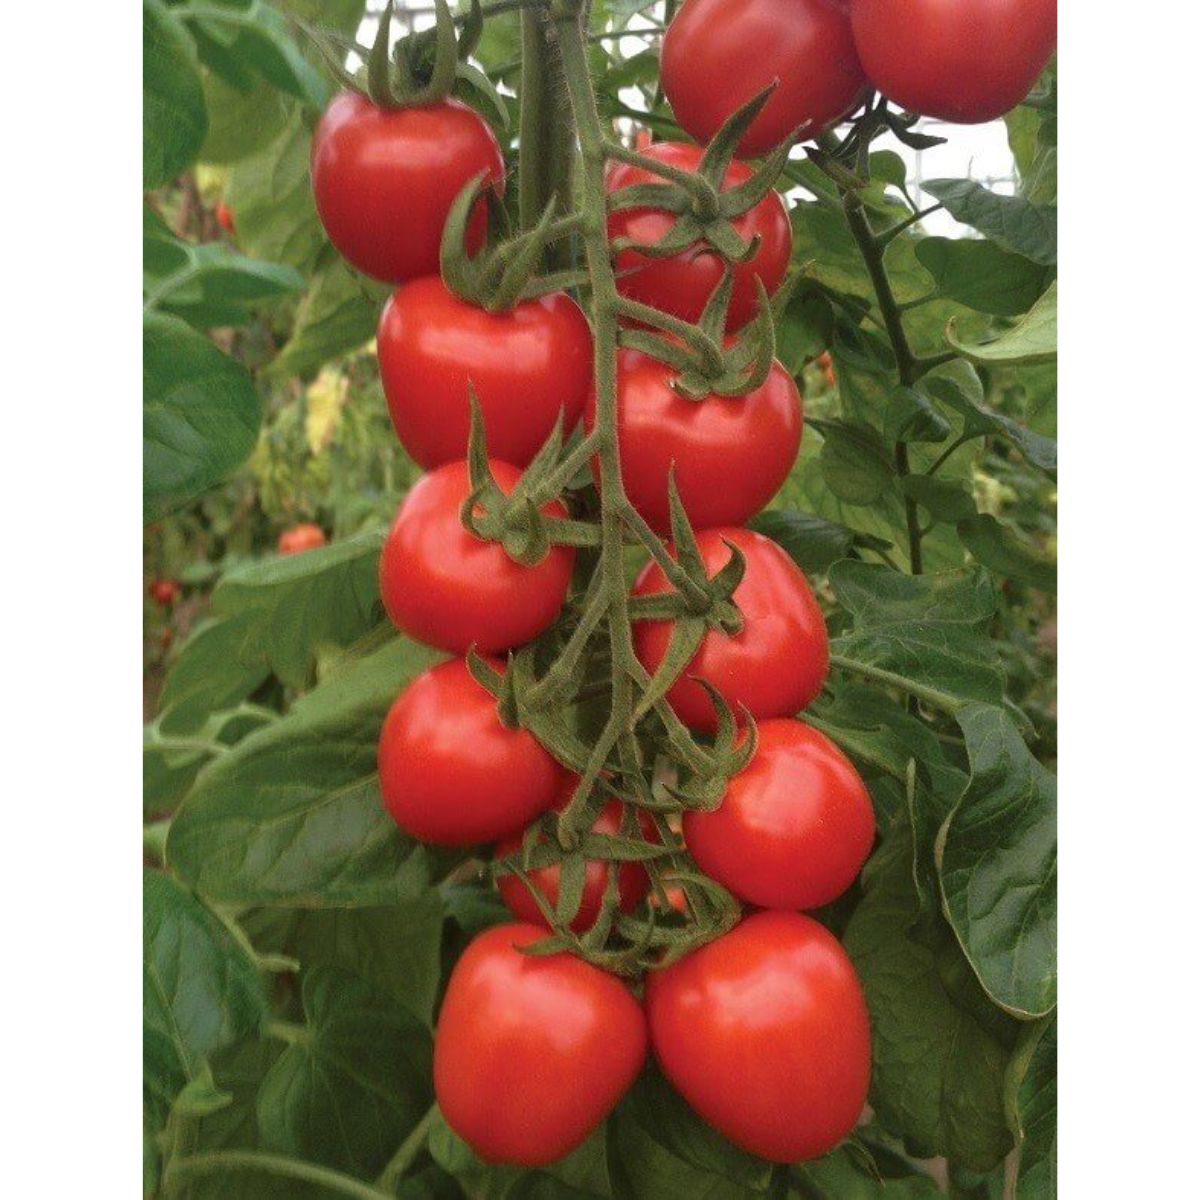 Tomate - Seminte de tomate RED HEART F1, 100 seminte, YUKSEL, hectarul.ro